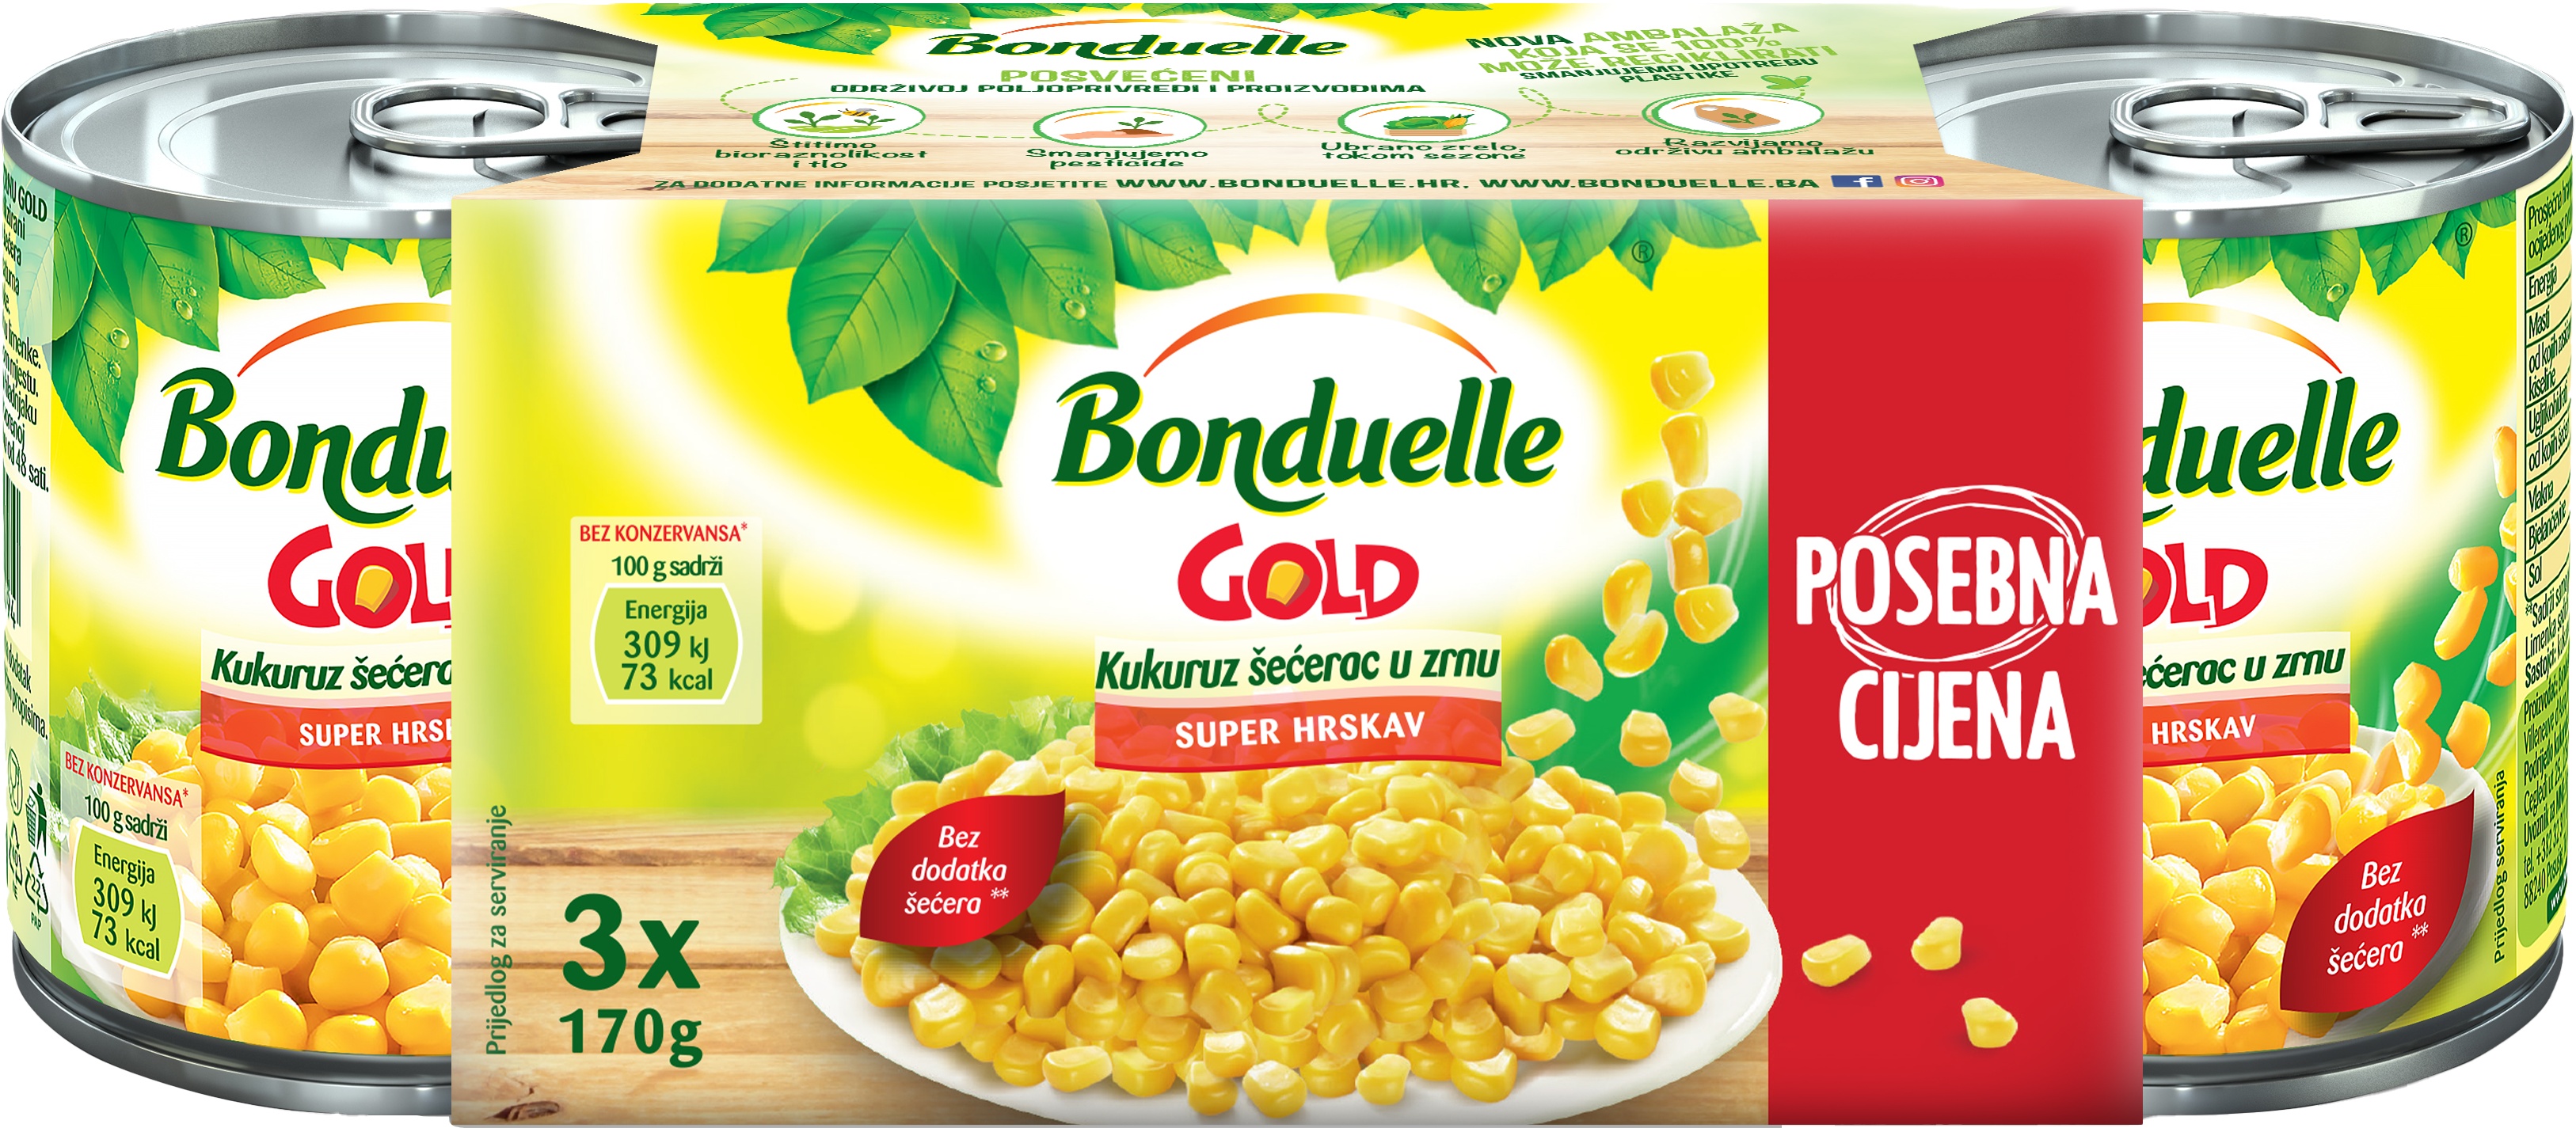 Slika za Bonduelle slatki kukuruz 2+1 gratis